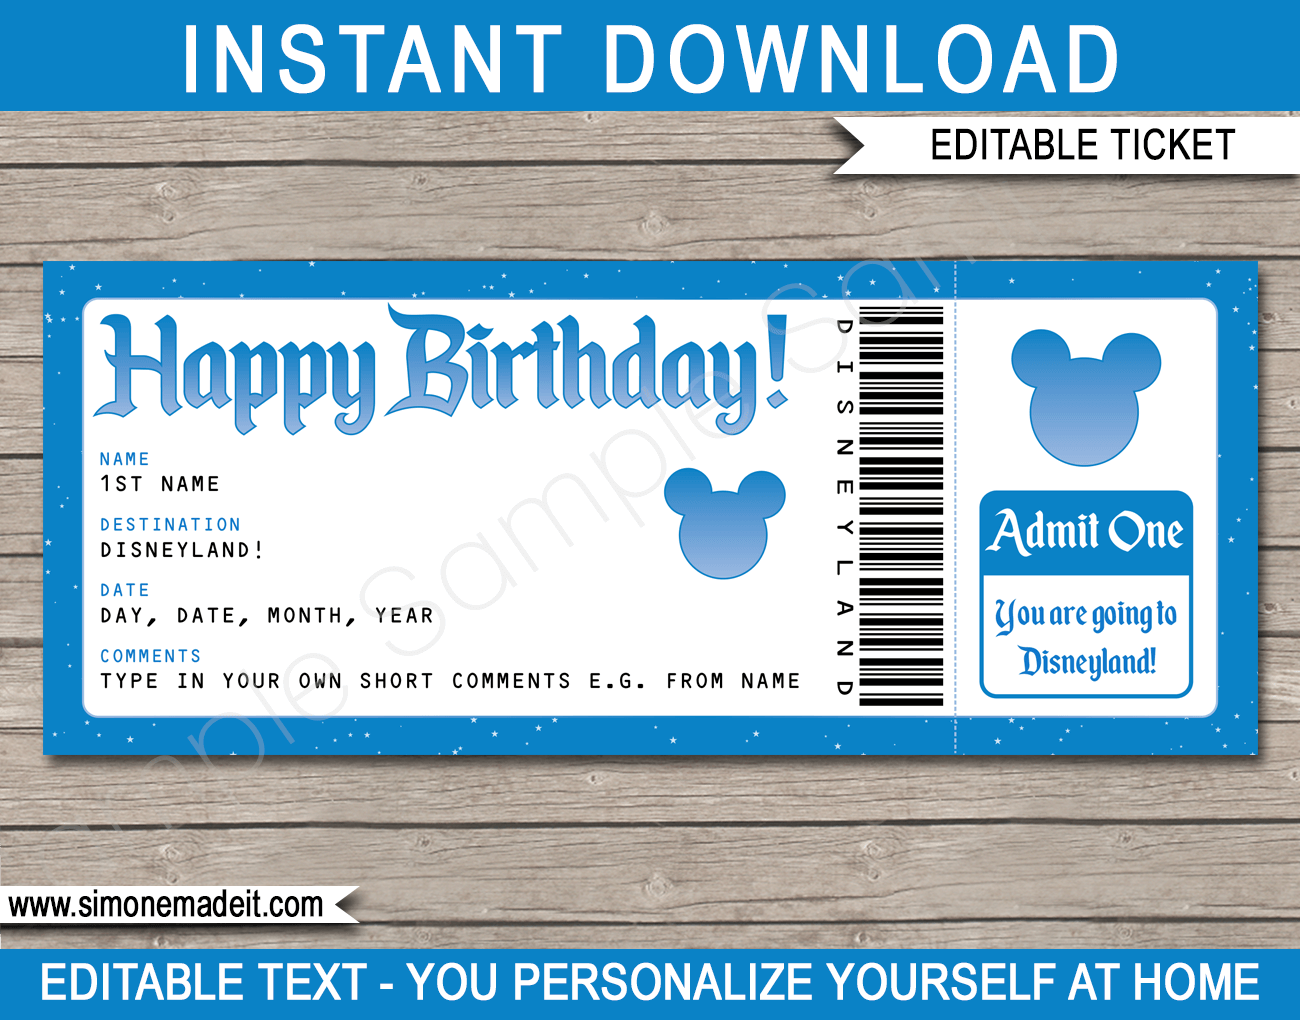 Printable Fake Disneyland Tickets